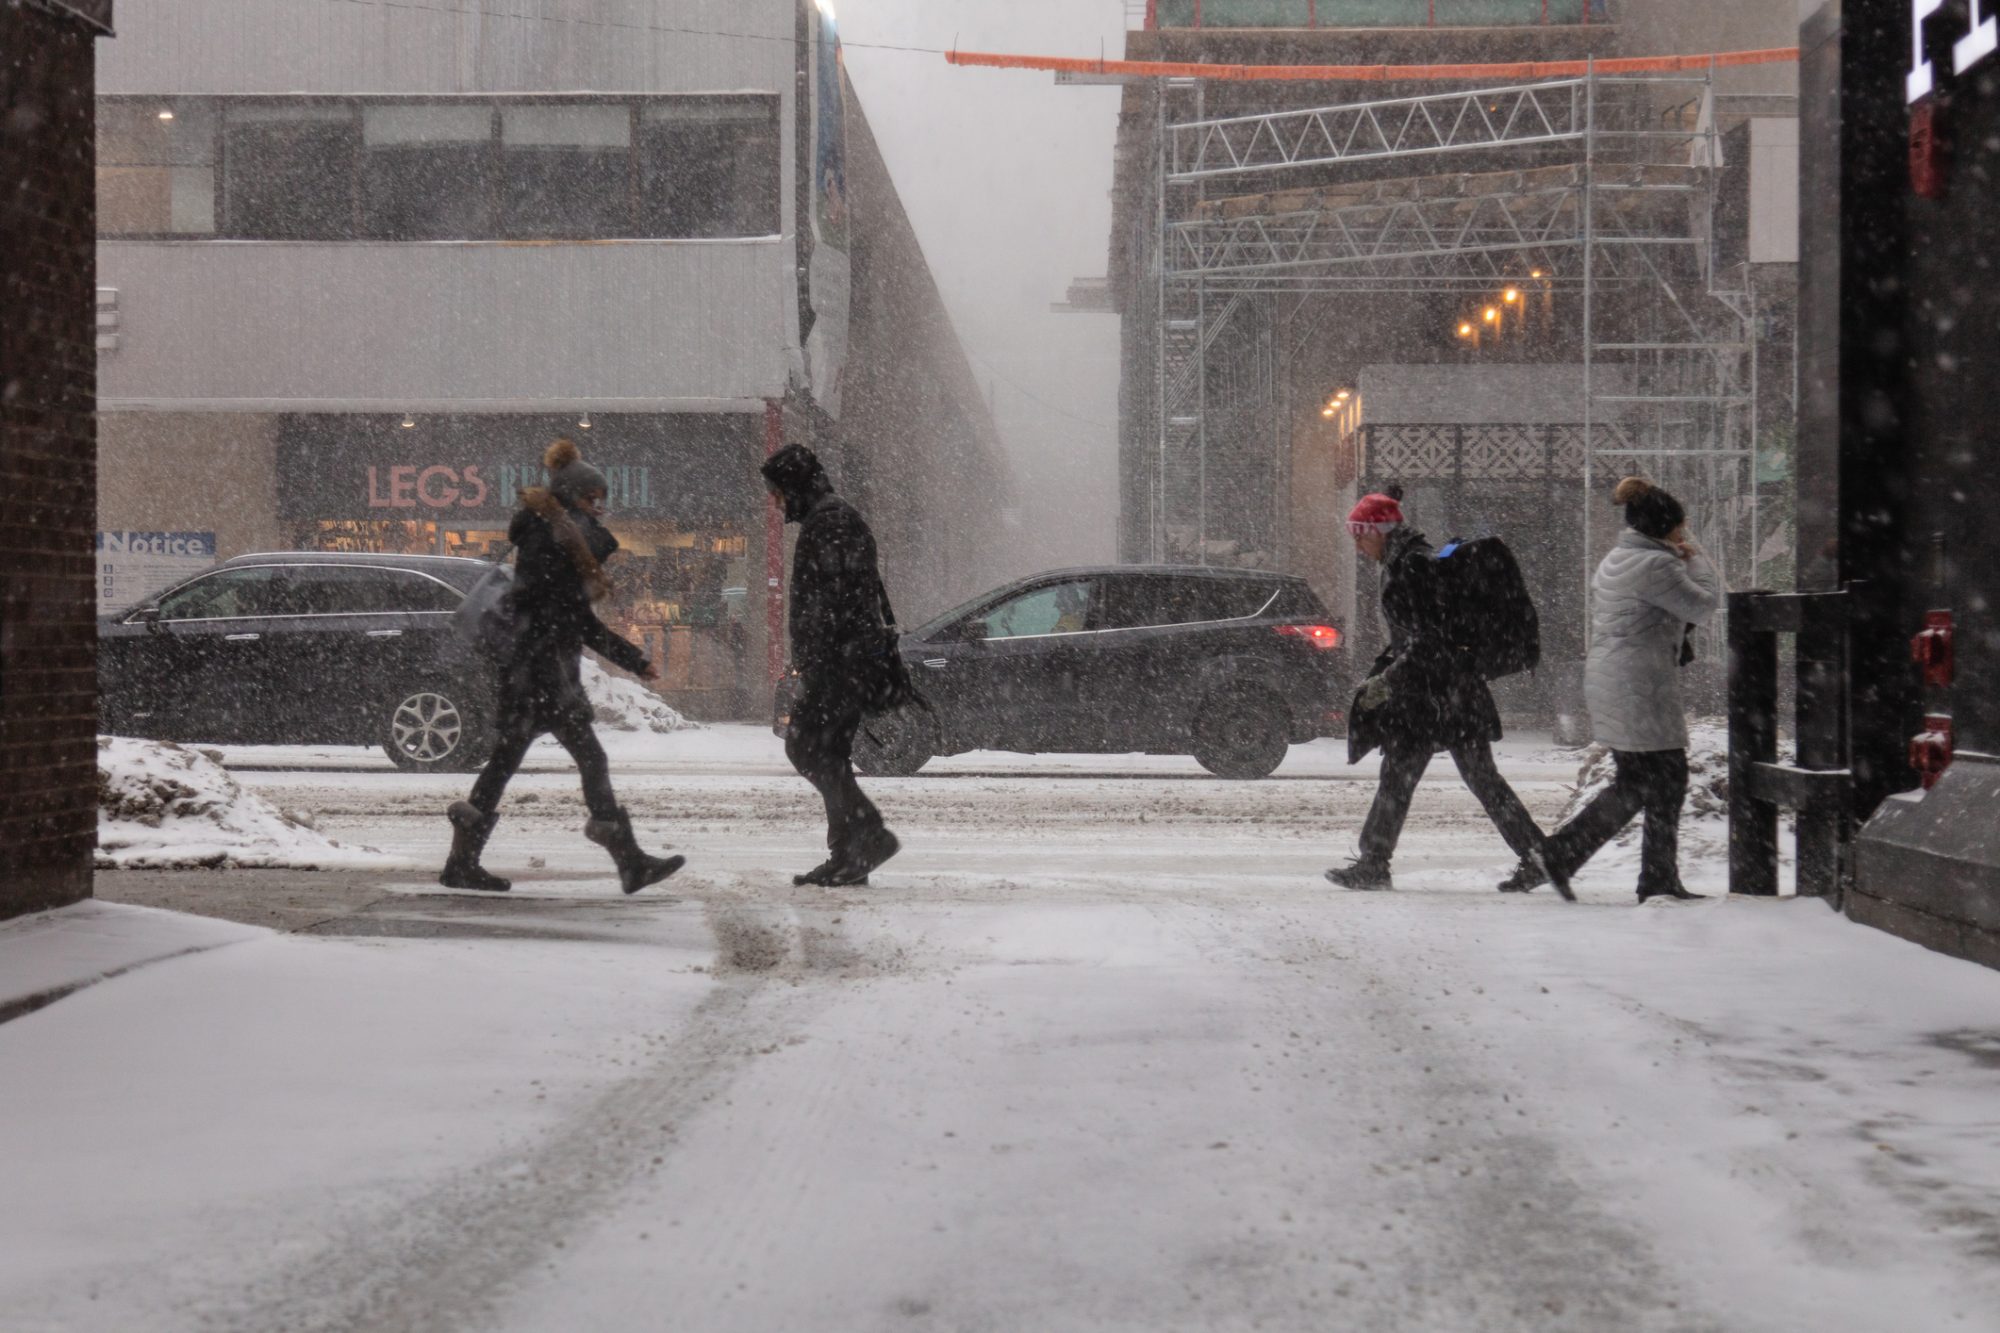 People walking down a busy Canadian street